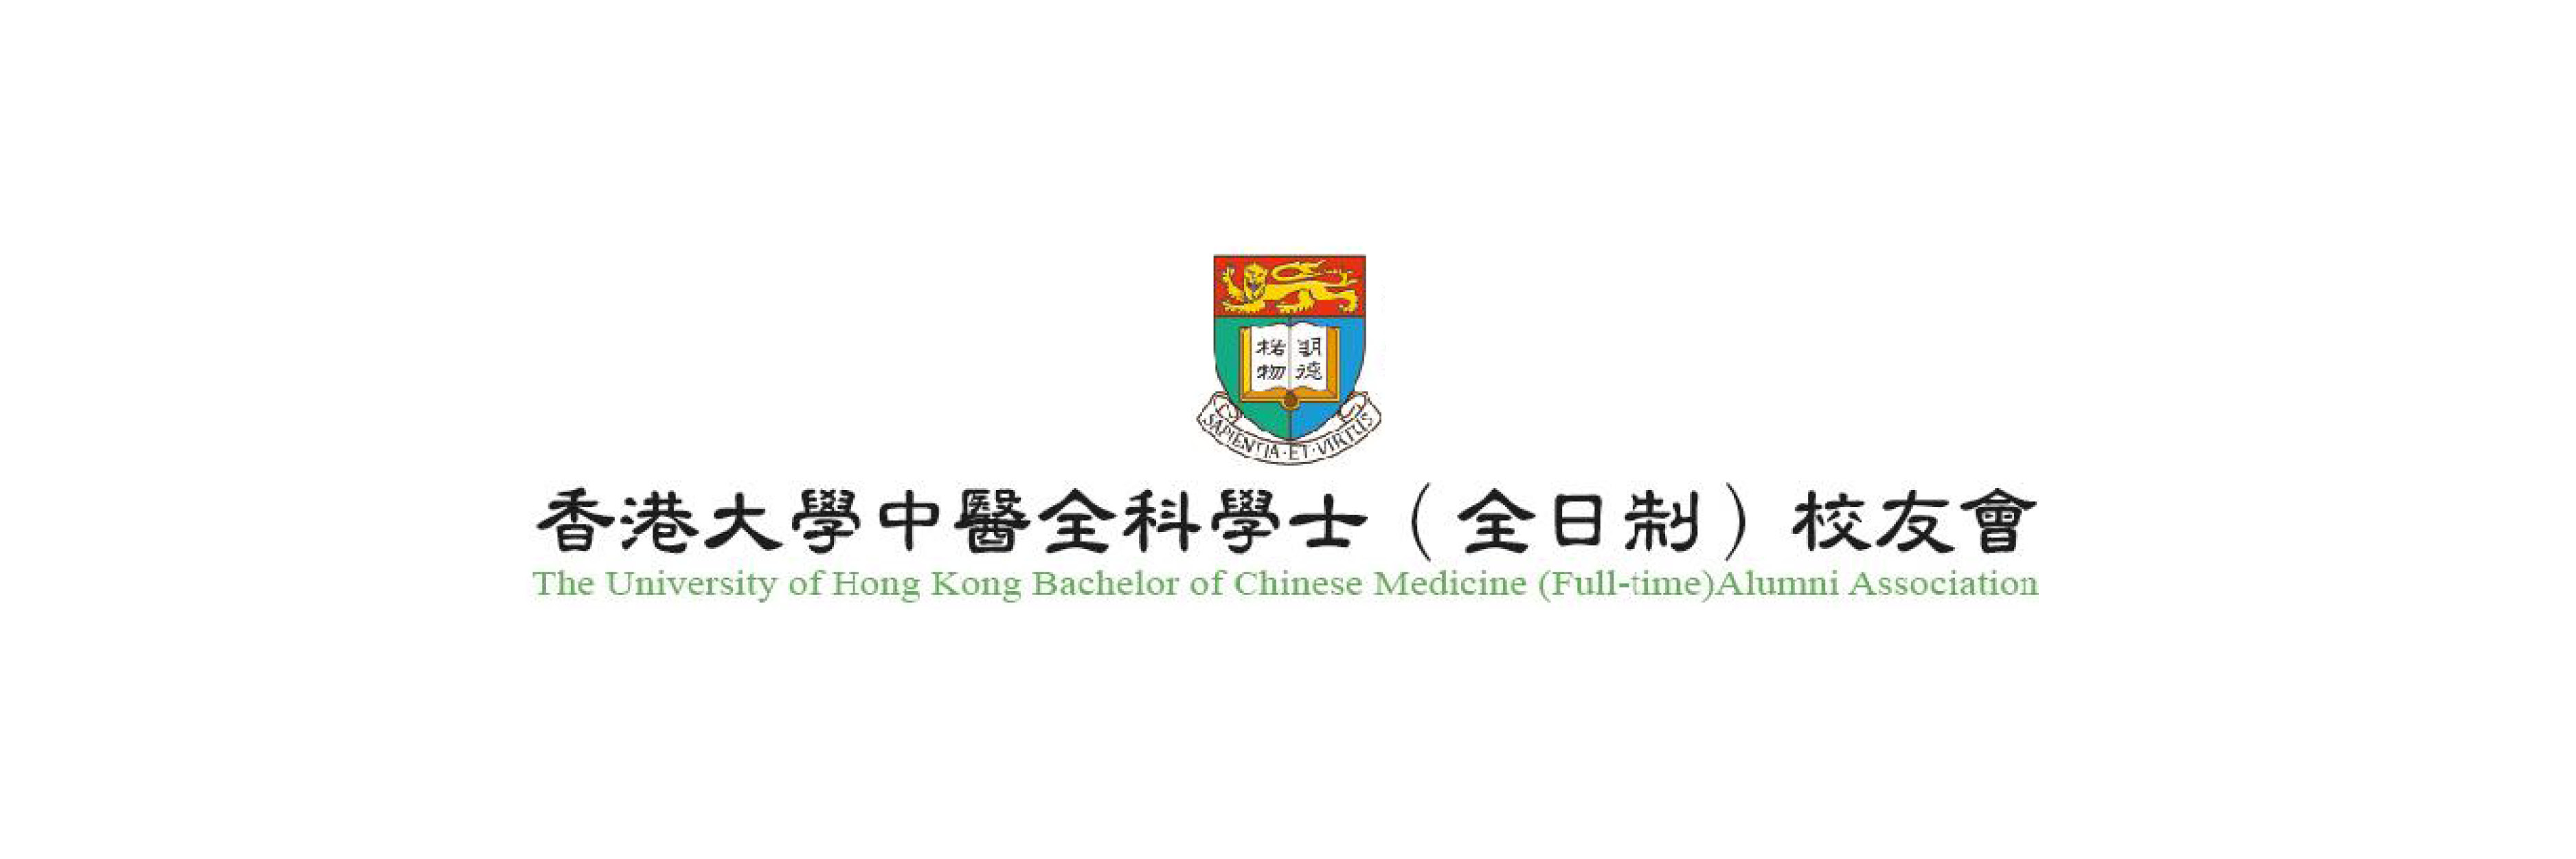 Logo of Bachelor of Chinese Medicine (Full-time) Alumni Association.